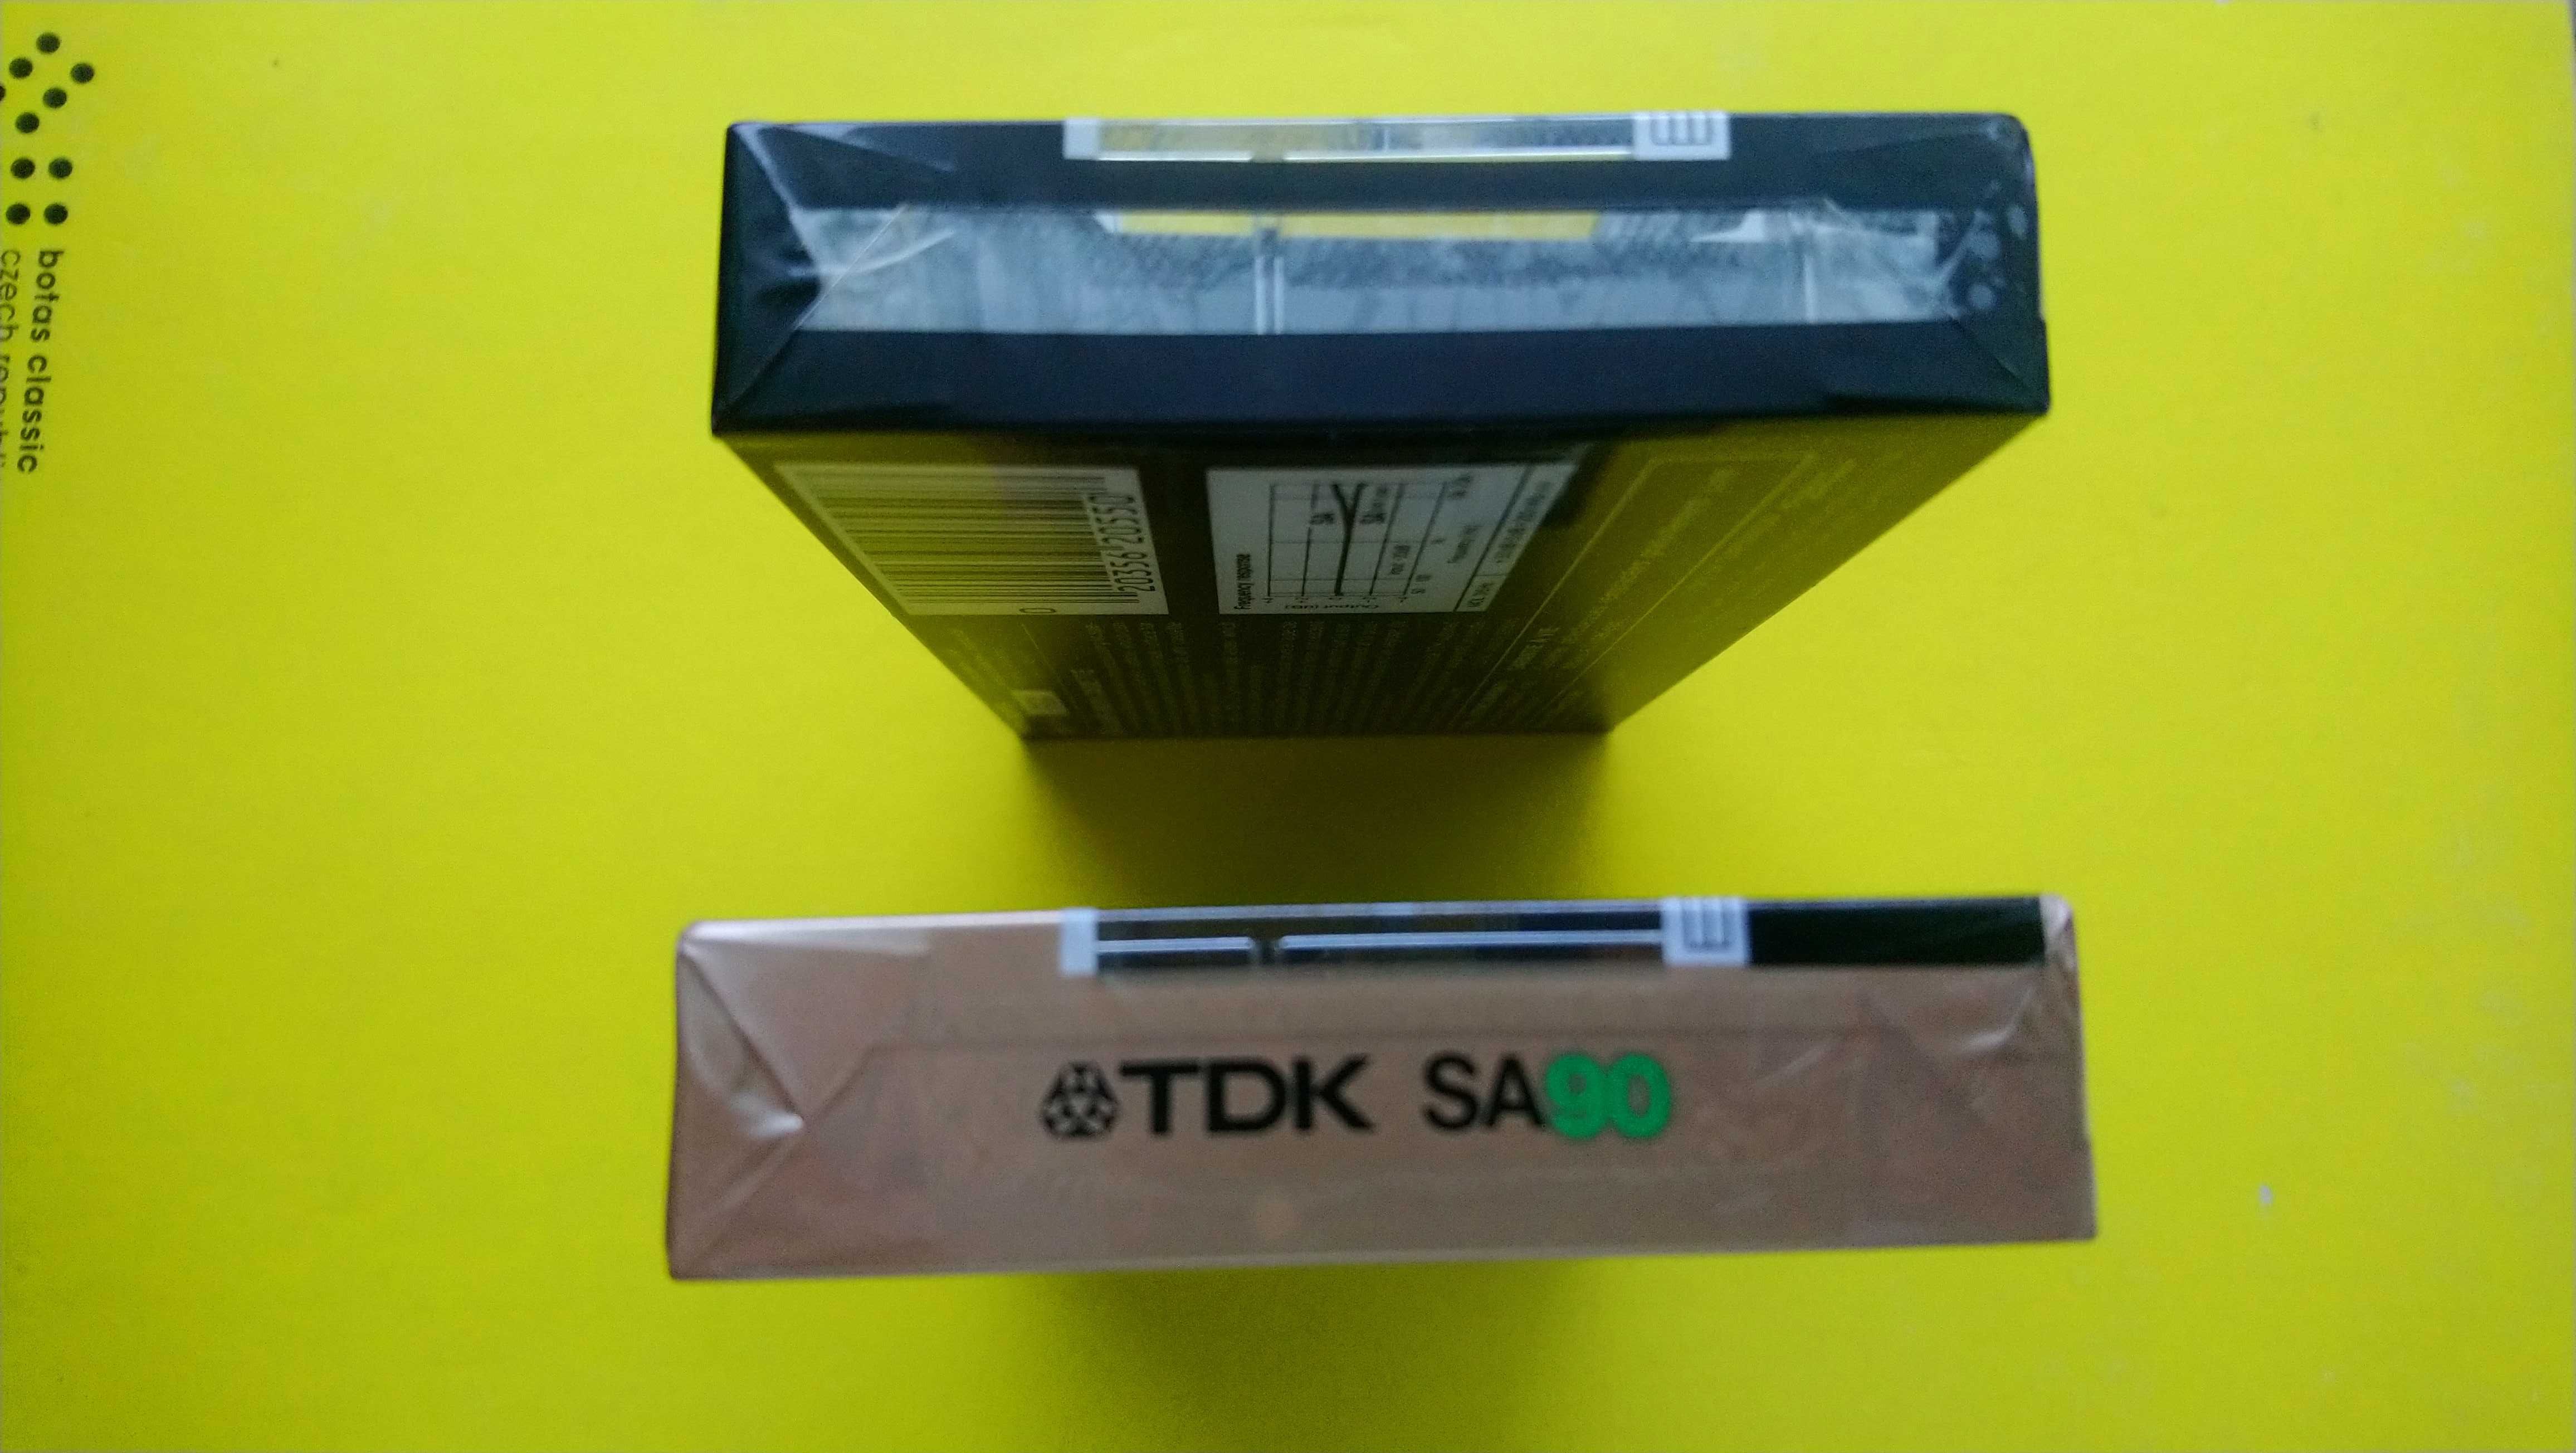 Аудиокассета, аудіокасета, аудио кассета, кассета TDK SA 90